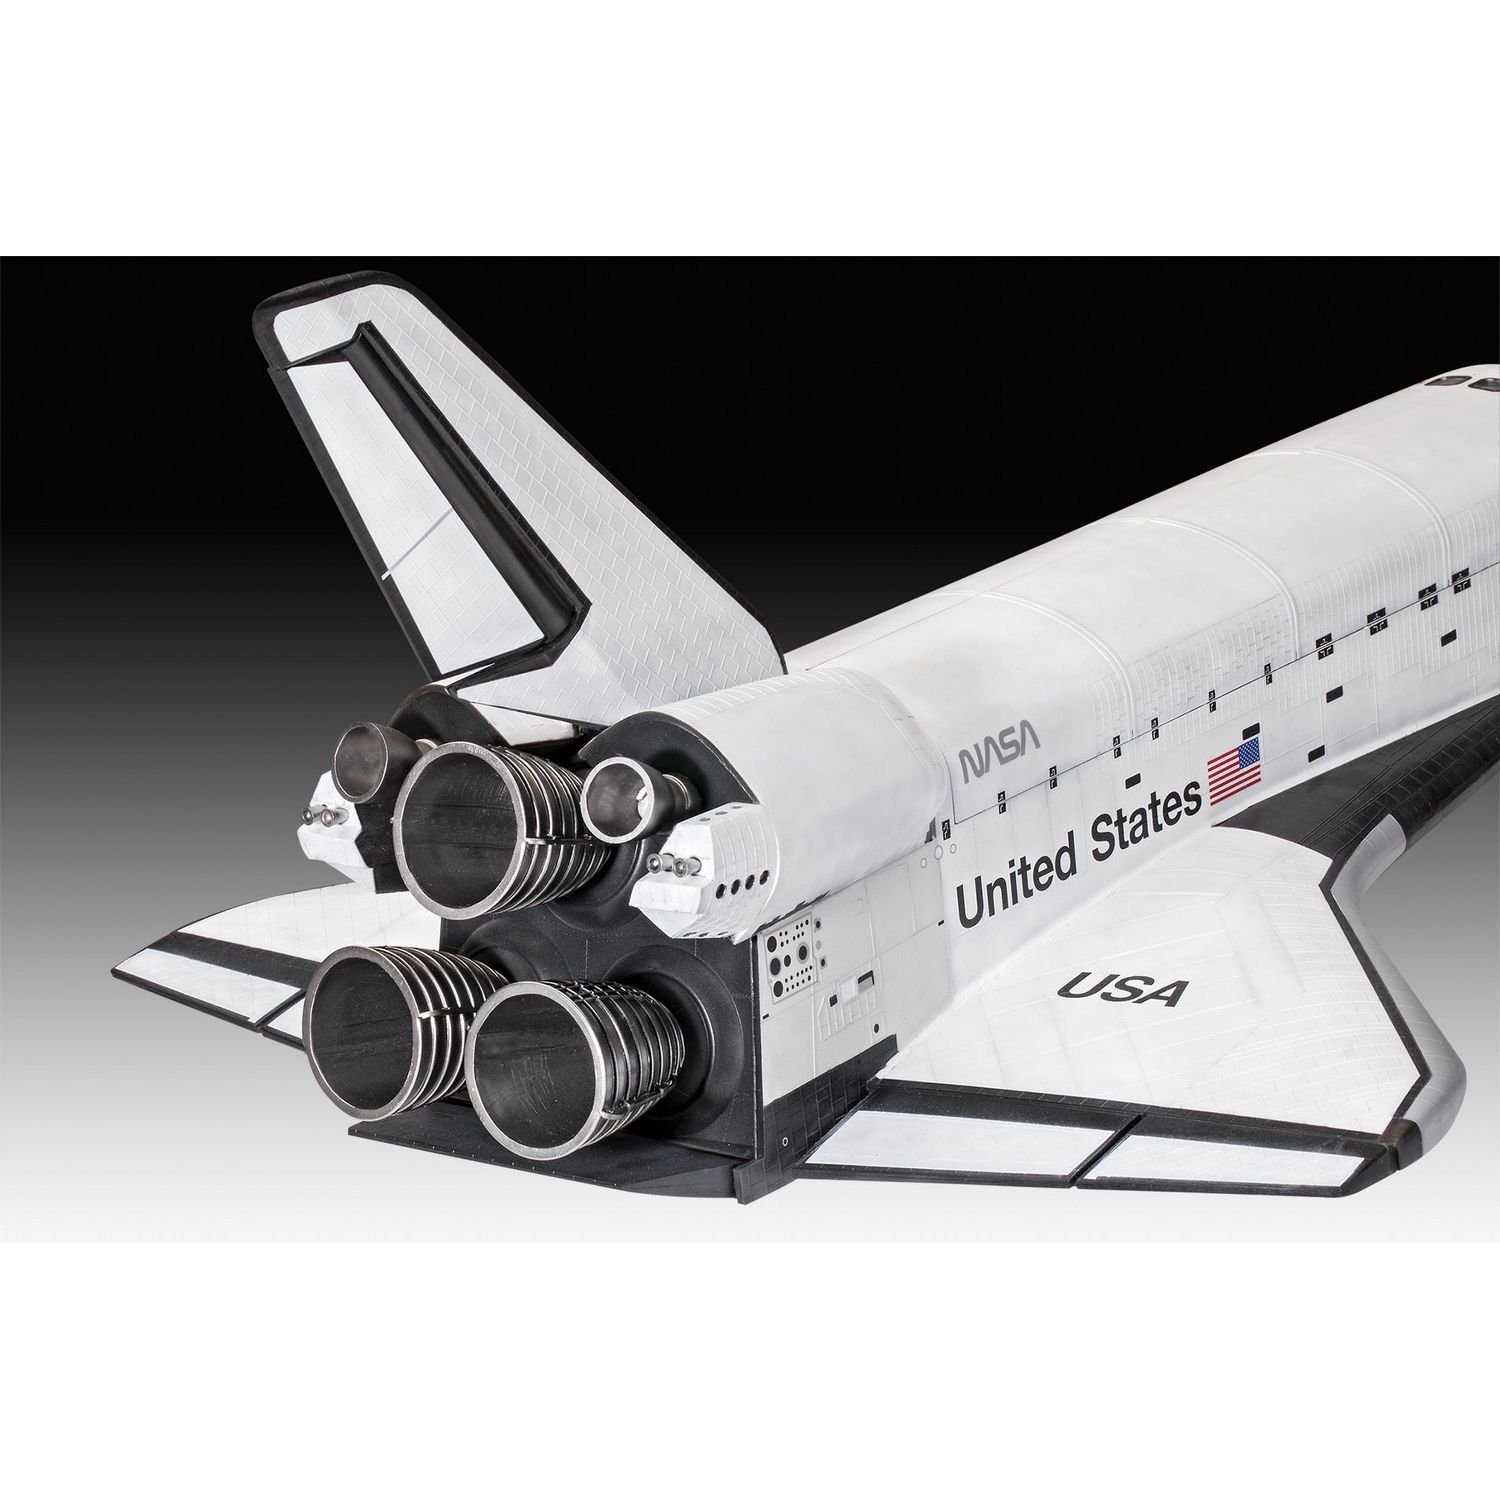 Сборная модель Revell Набор Space Shuttle, уровень 5, масштаб 1:72, 111 деталей (RVL-05673) - фото 7